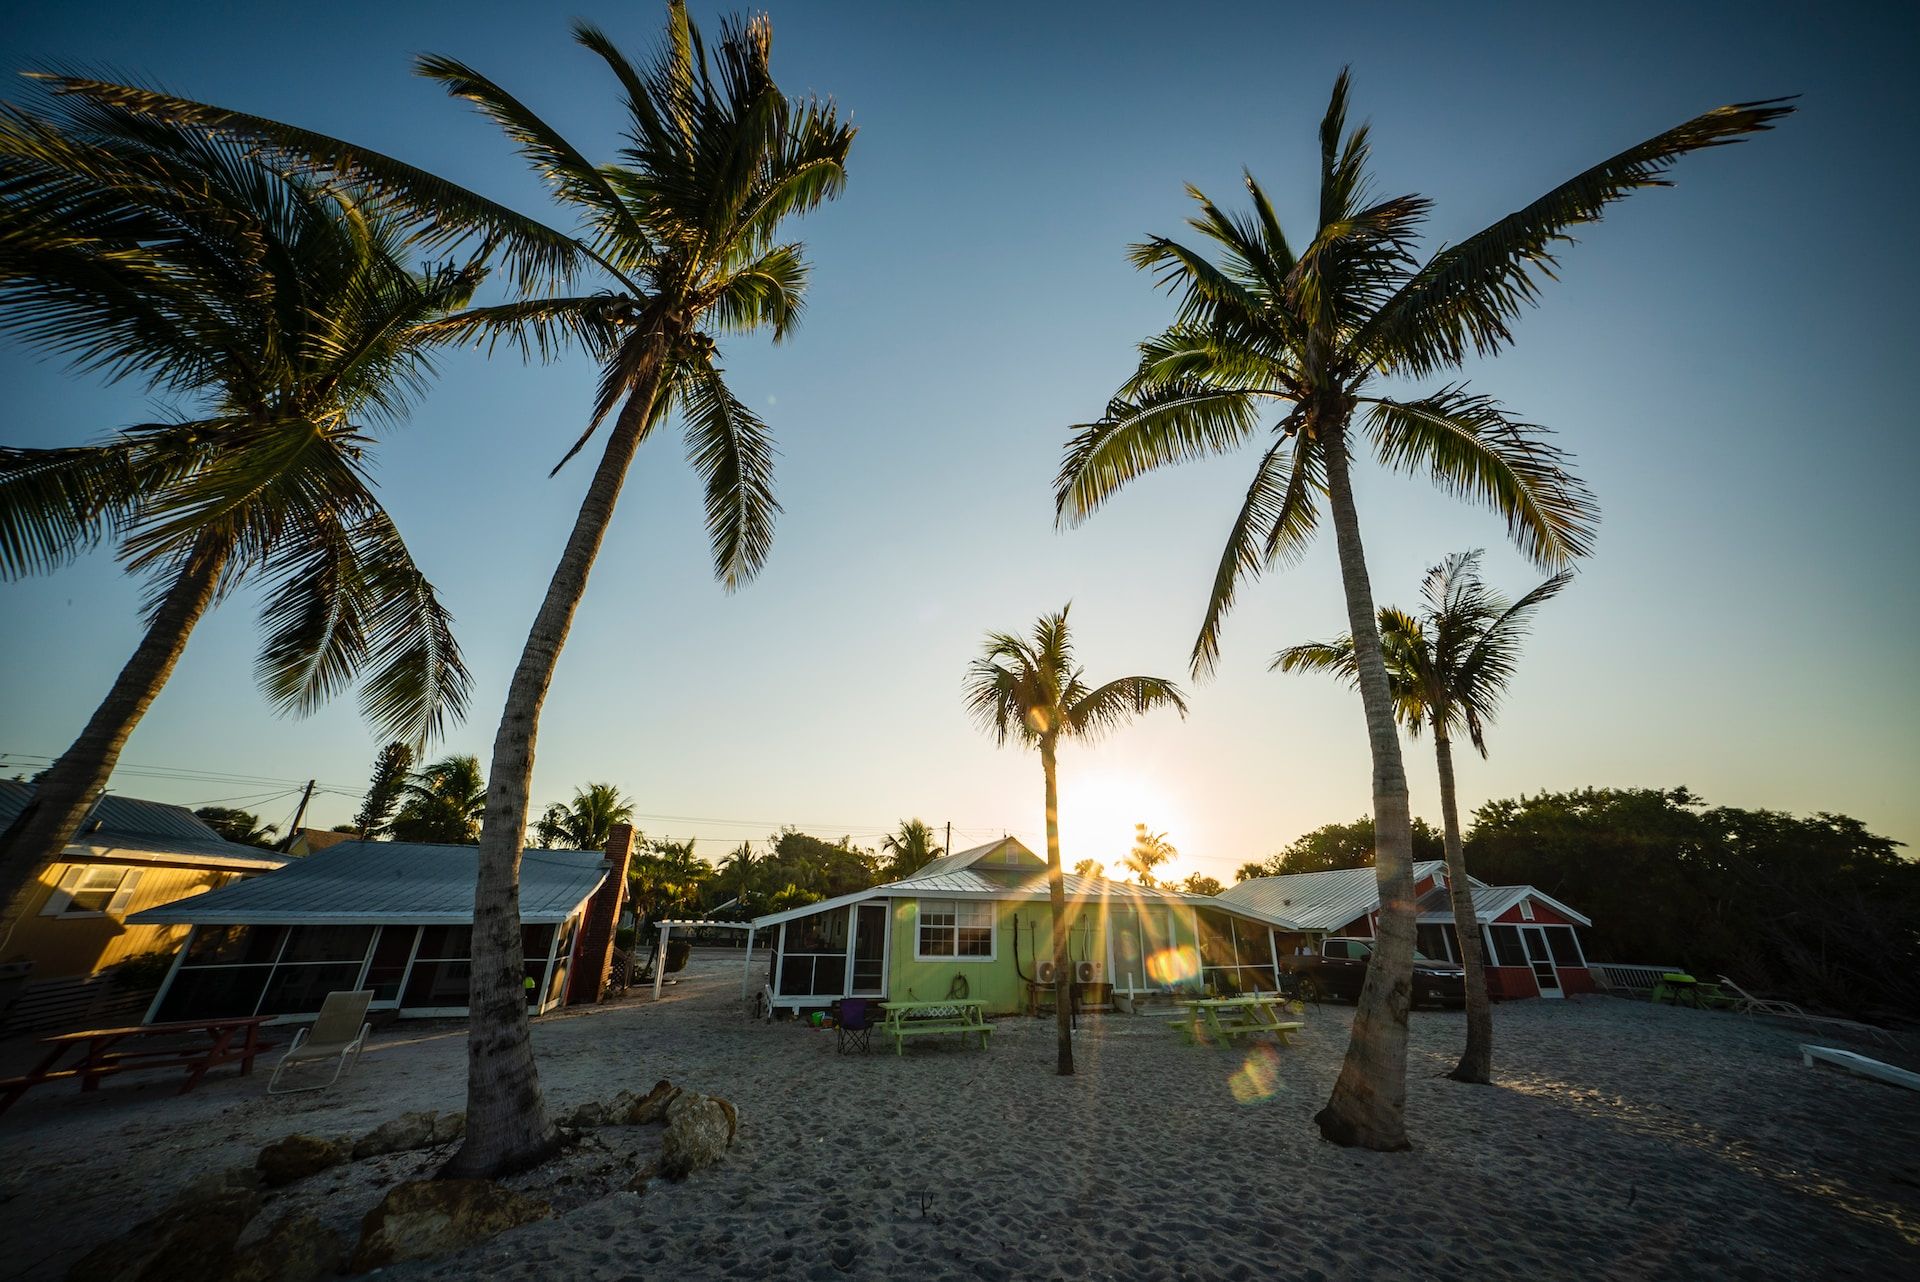 Colorful beach shacks on Sanibel Island, Florida, USA